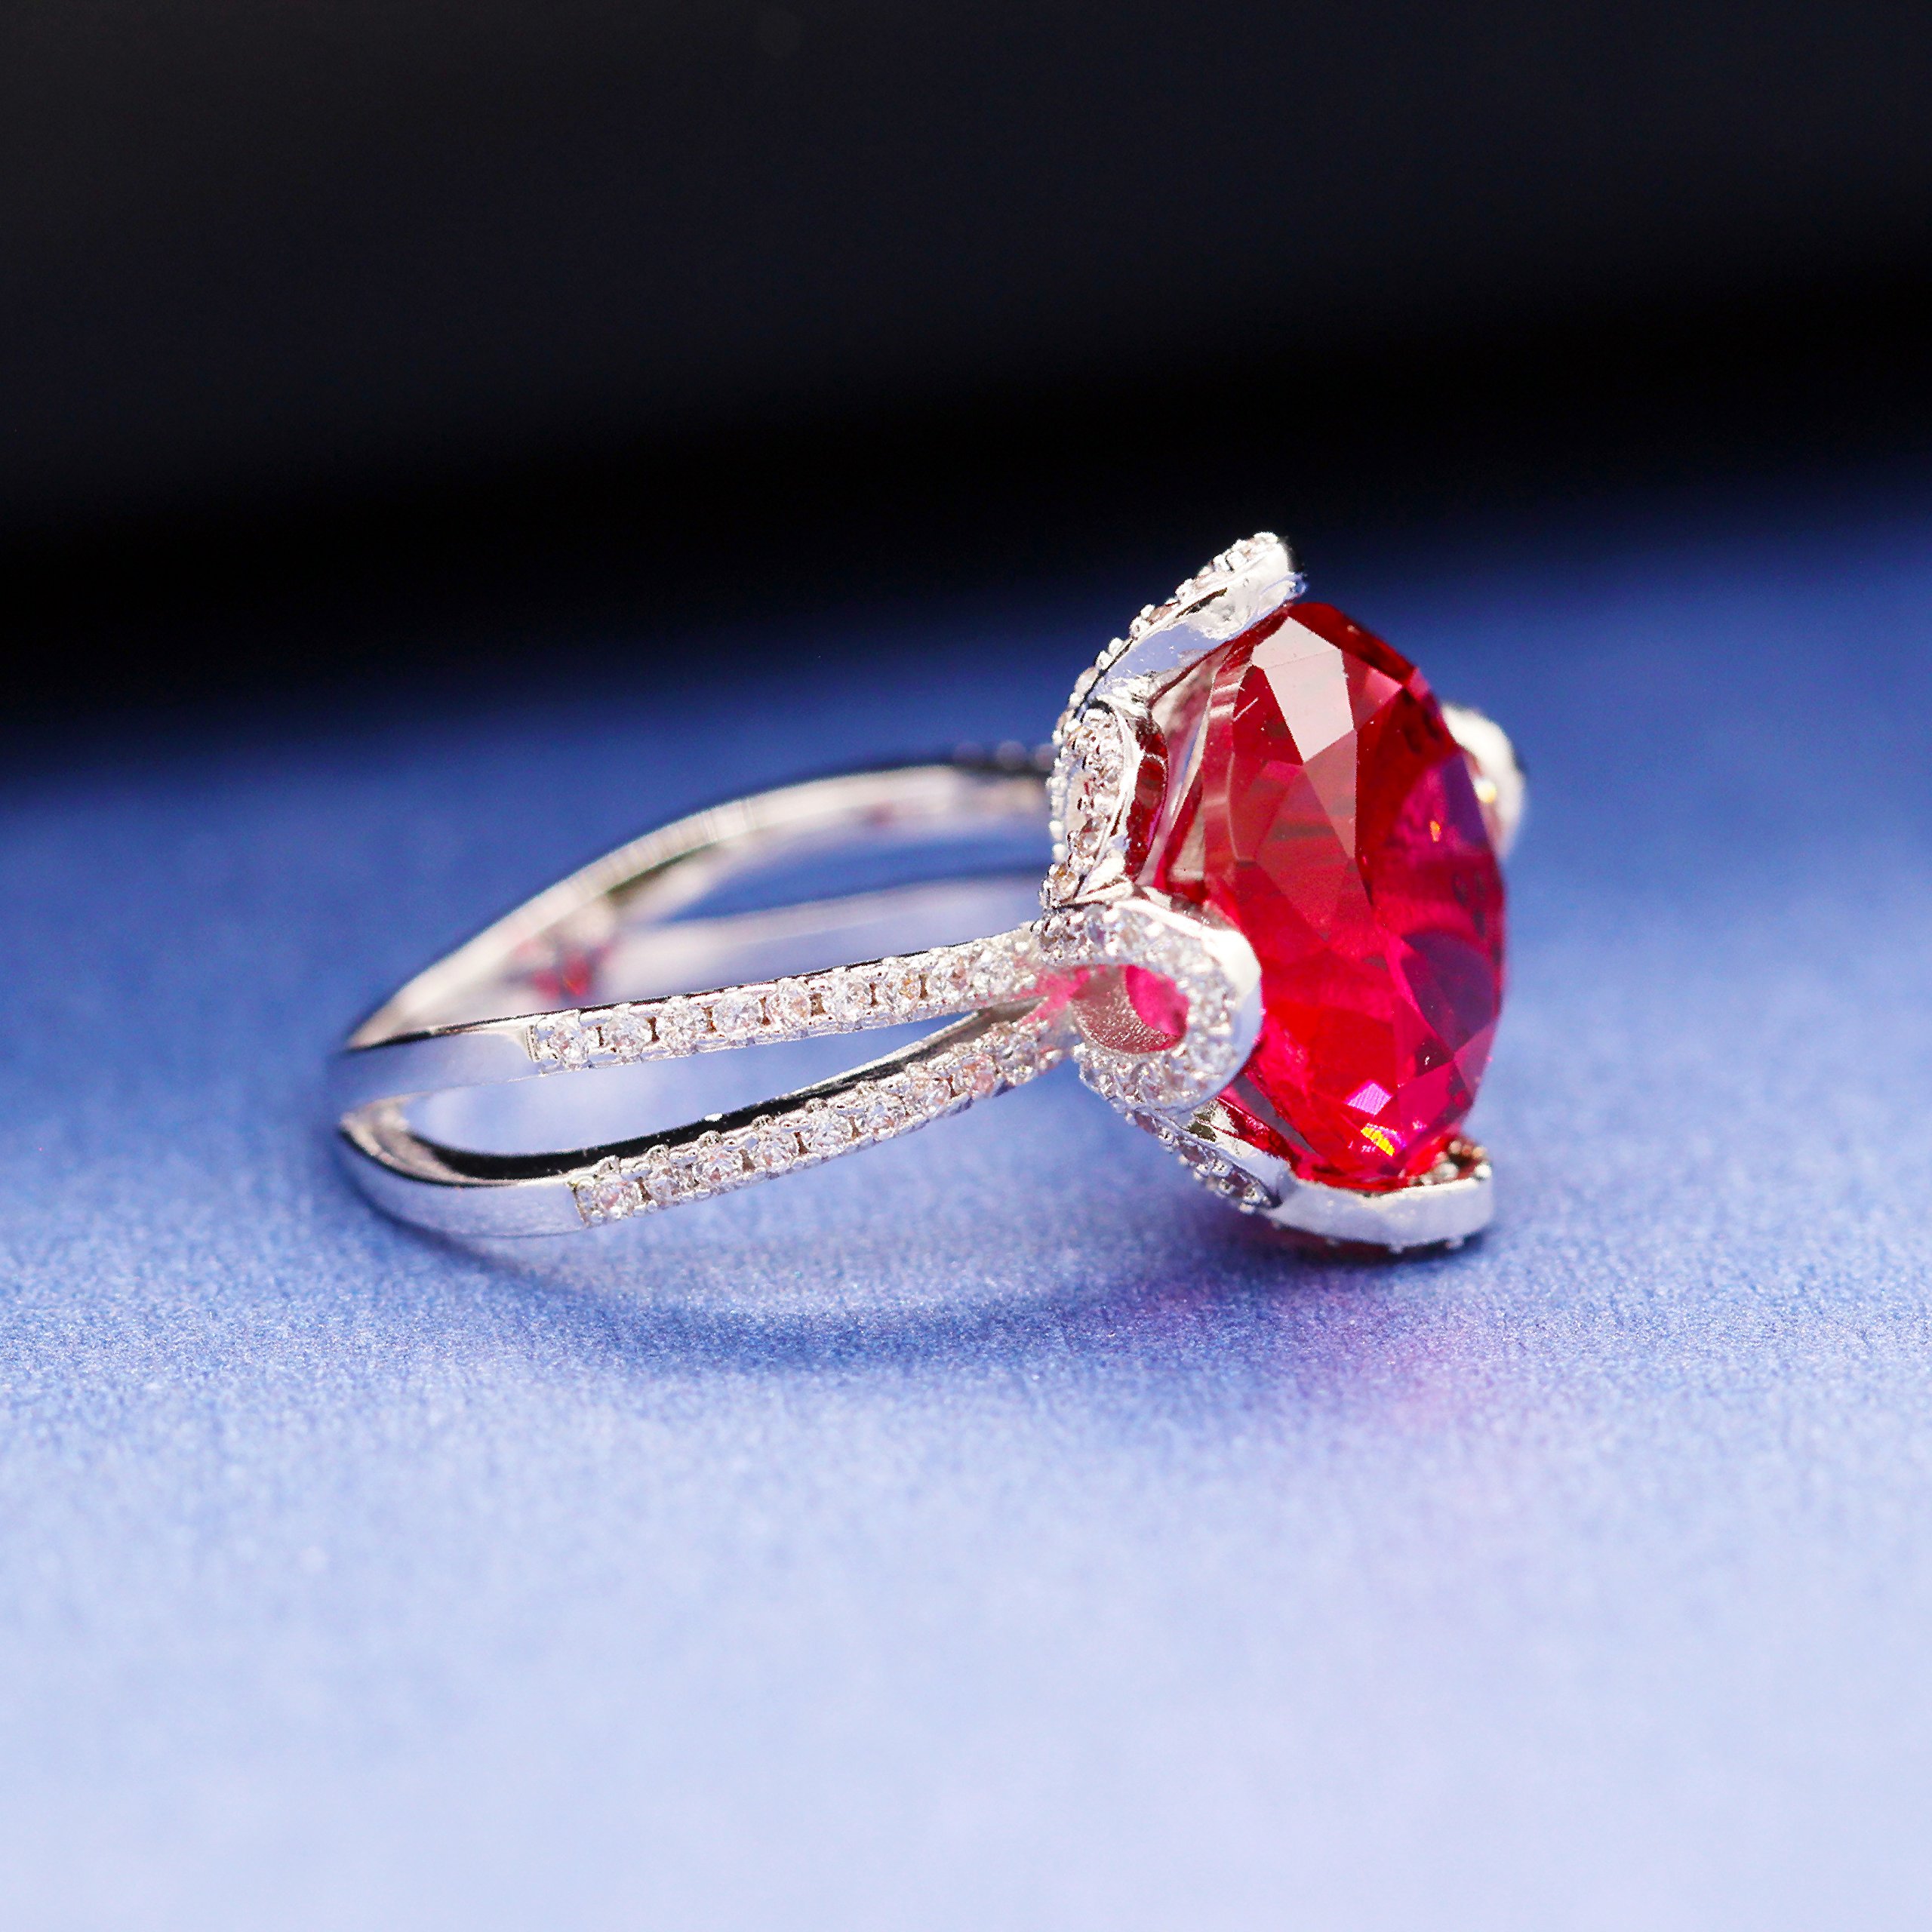 Uloveido Female Unique Beautiful Red Flower Engagement Wedding Ring - Charm Created Garnet Diamond Jewelry for Women (Size 6 7 8 9 10) RJ212